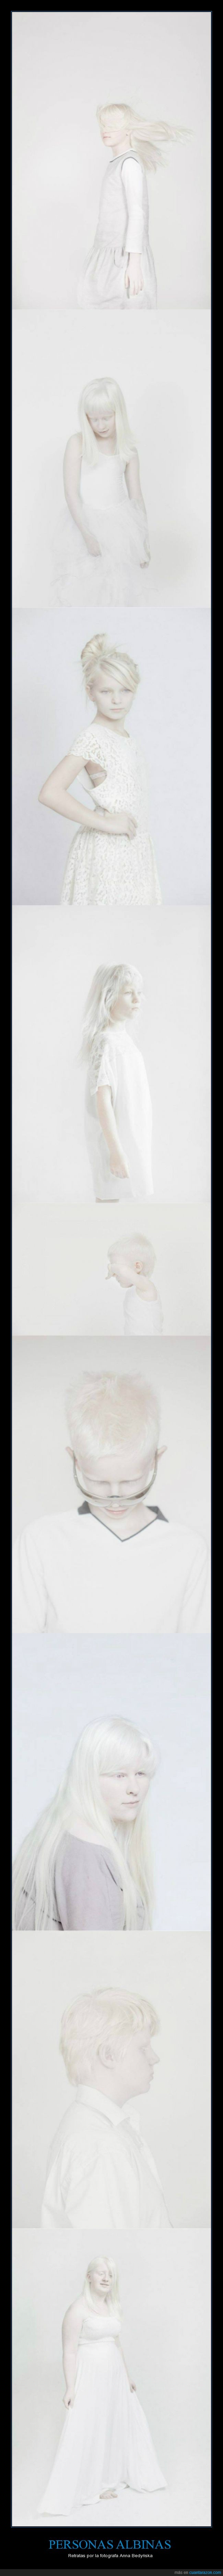 albino,Anna Bedynska,blanco,brillo,fotografa,me siento negra,papel